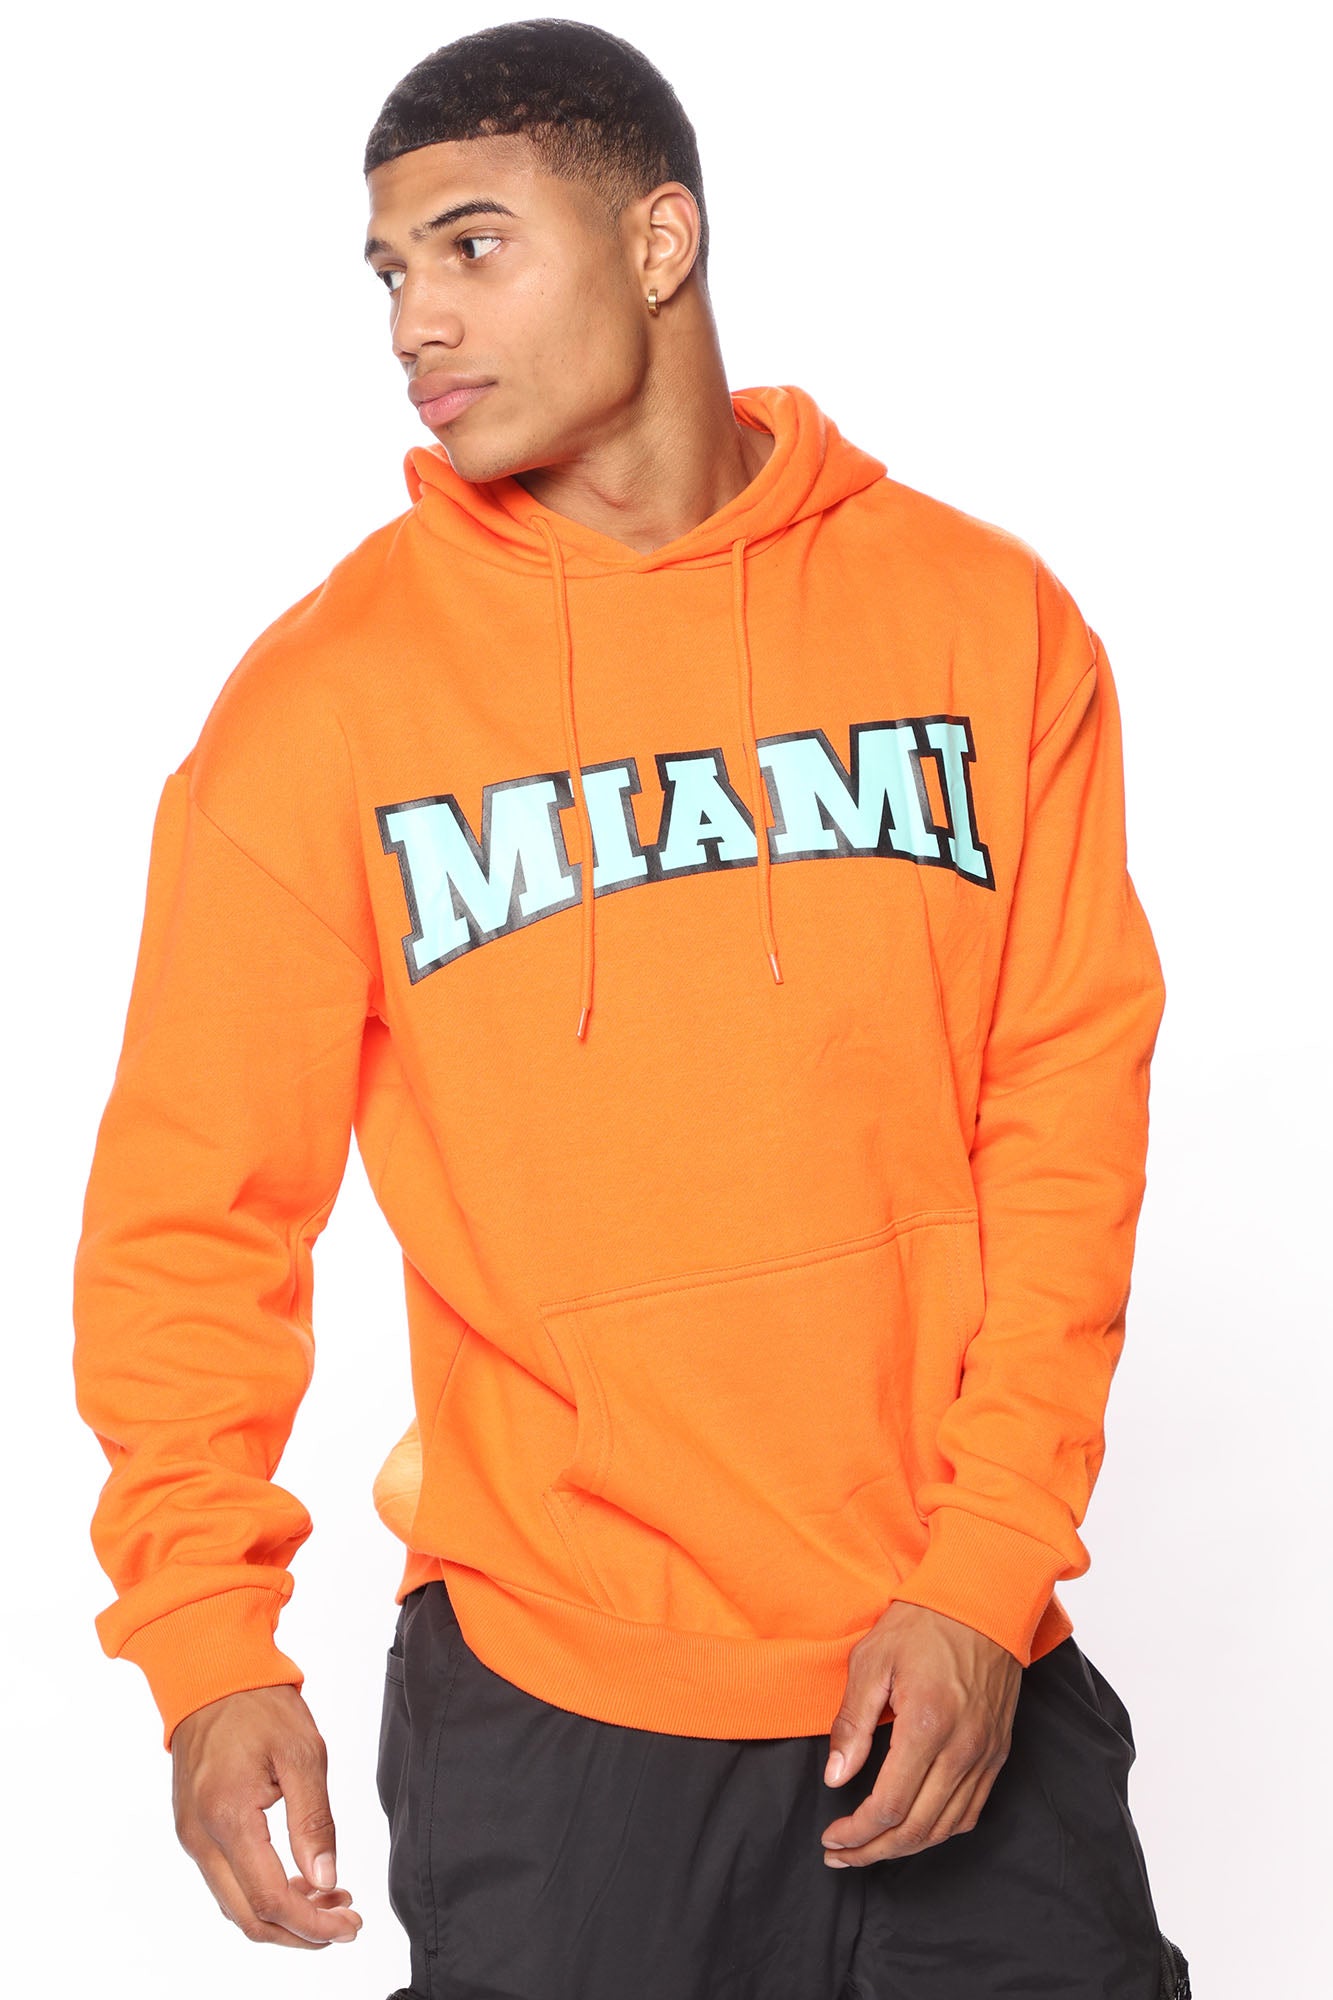 Kenny Zip Up Hoodie - Orange, Fashion Nova, Mens Jackets